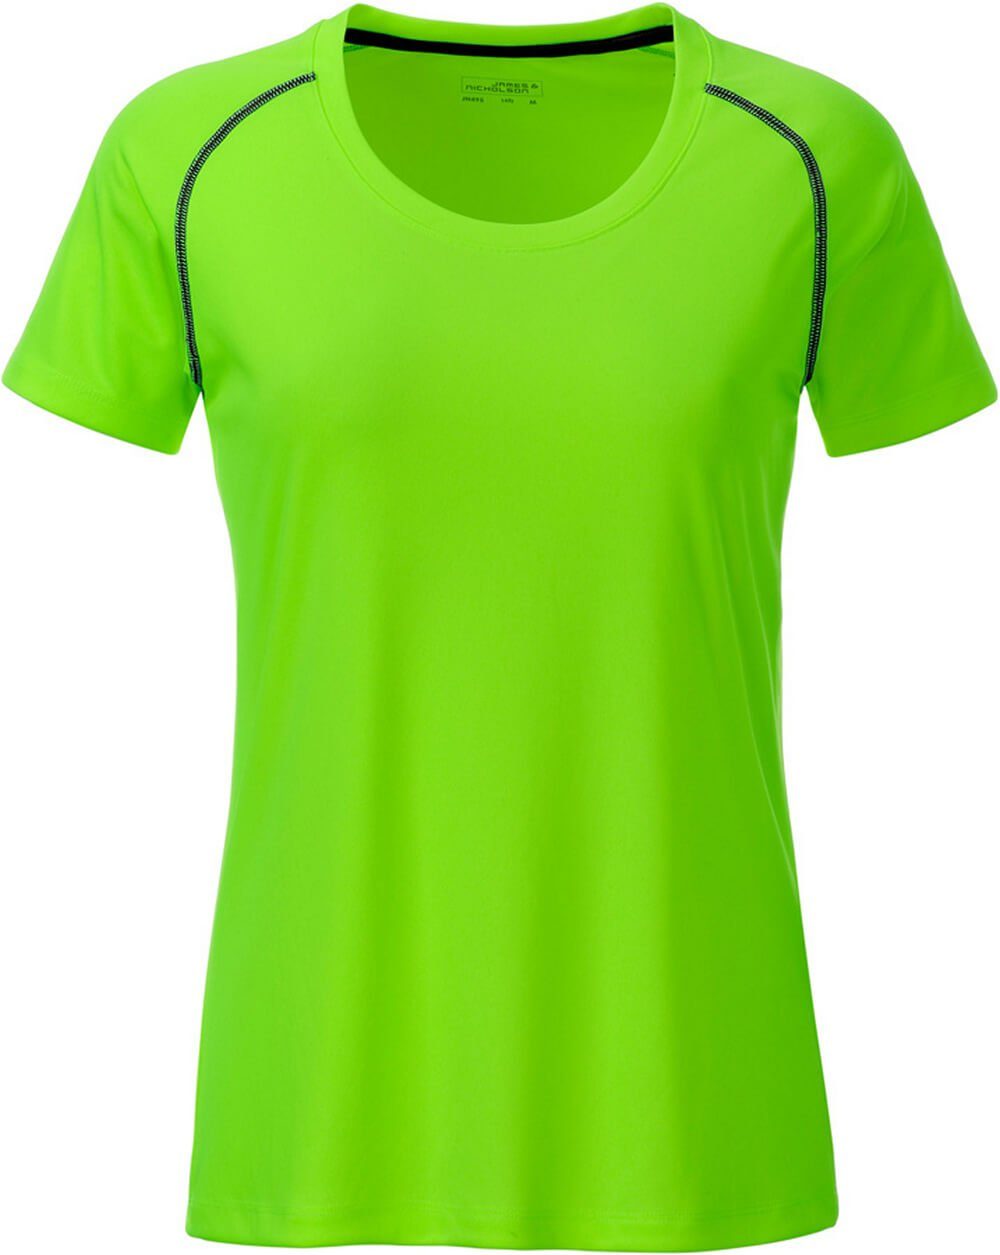 James & Nicholson Funktionsshirt James & Nicholson JN 495 Damen Funktions-Shirt schnell trocknend bright green/black